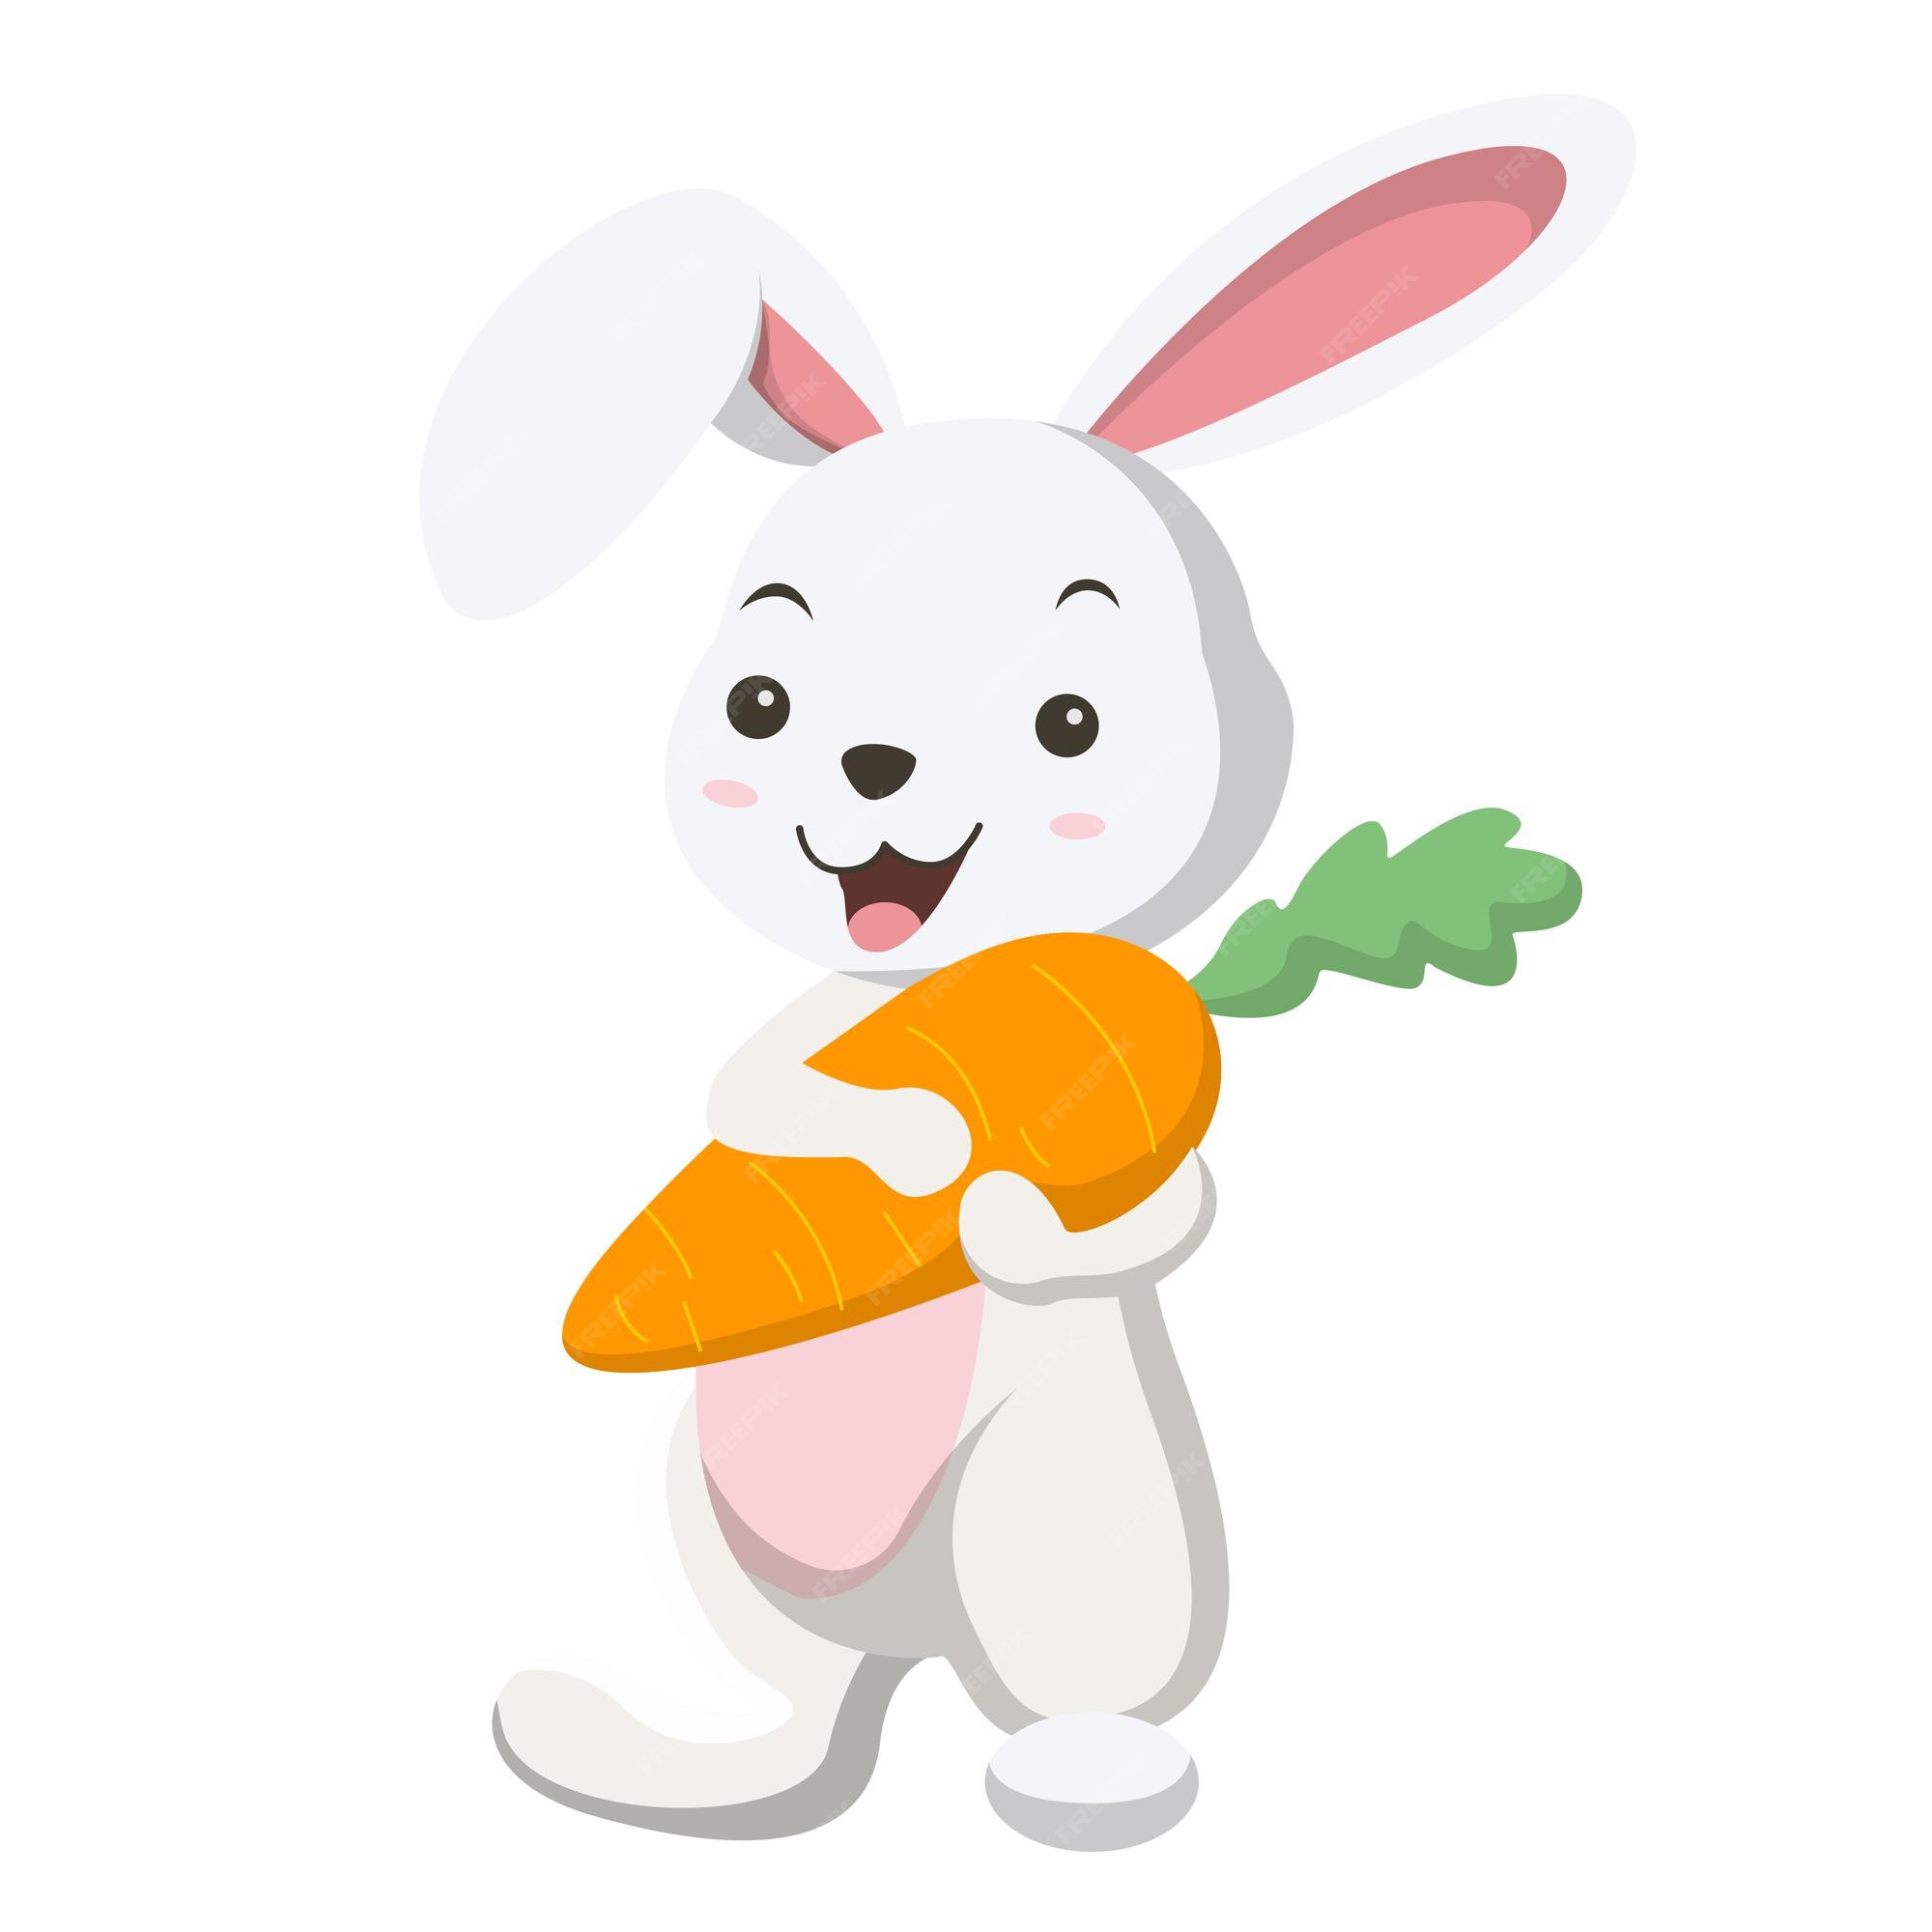 Premium Vector | Cute white rabbit holding a carrot